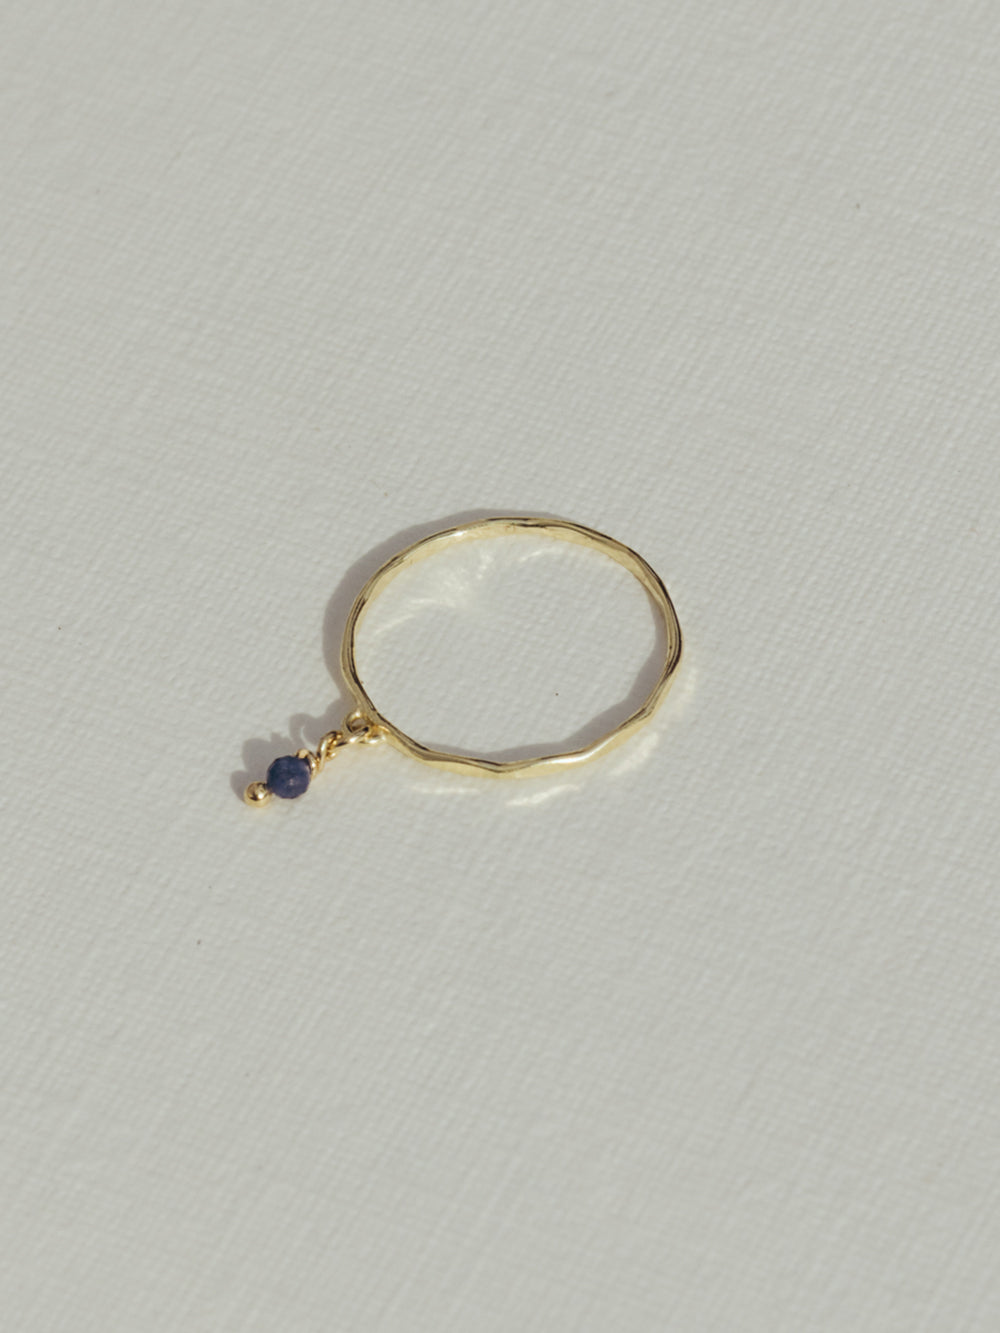 Birthstone ring September - Sapphire | 14K Gold Plated